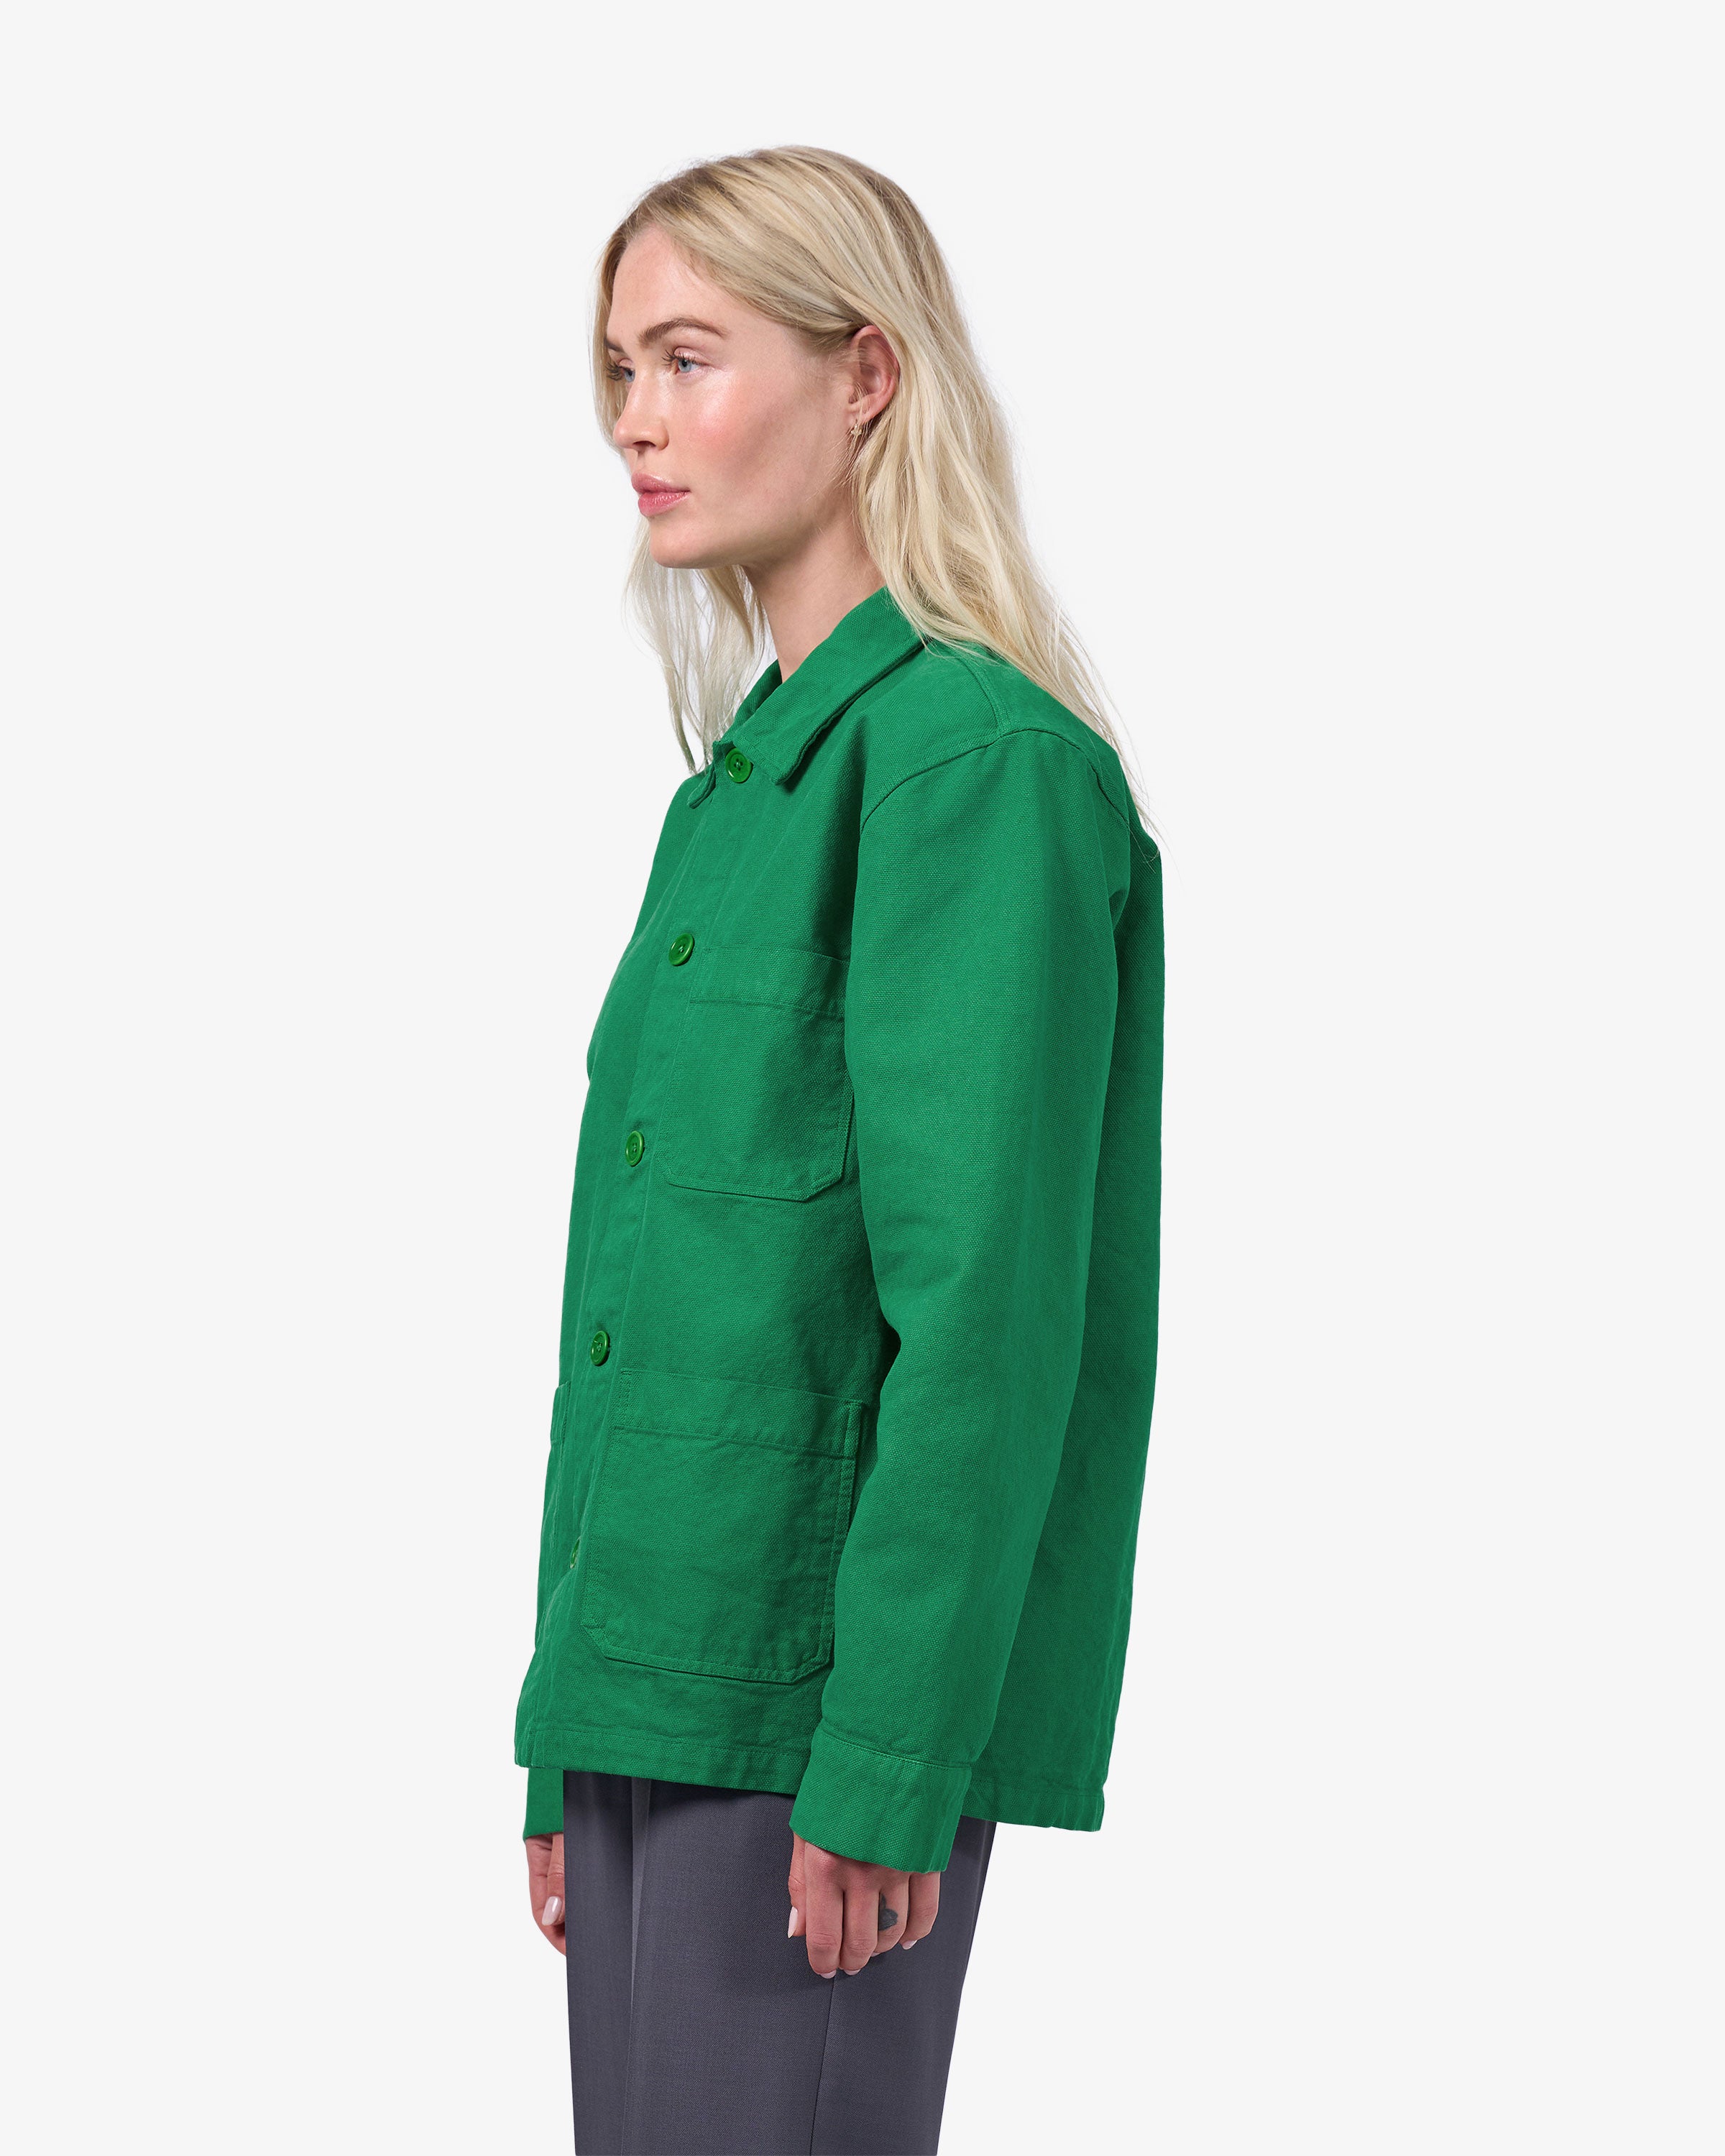 Organic Workwear Jacket - Kelly Green